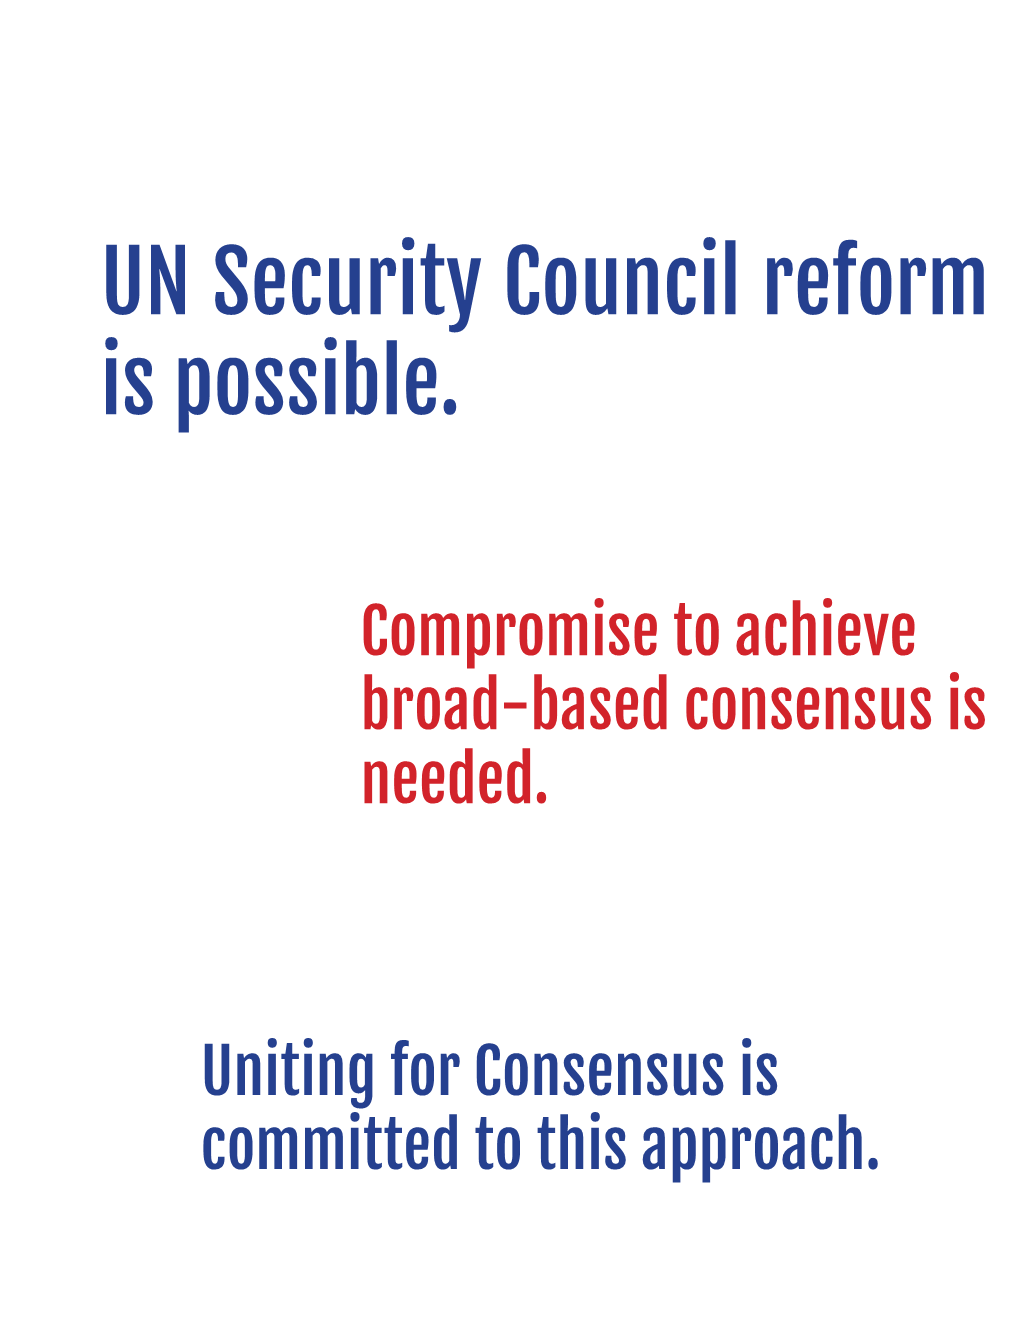 UN Security Council Reform Is Possible